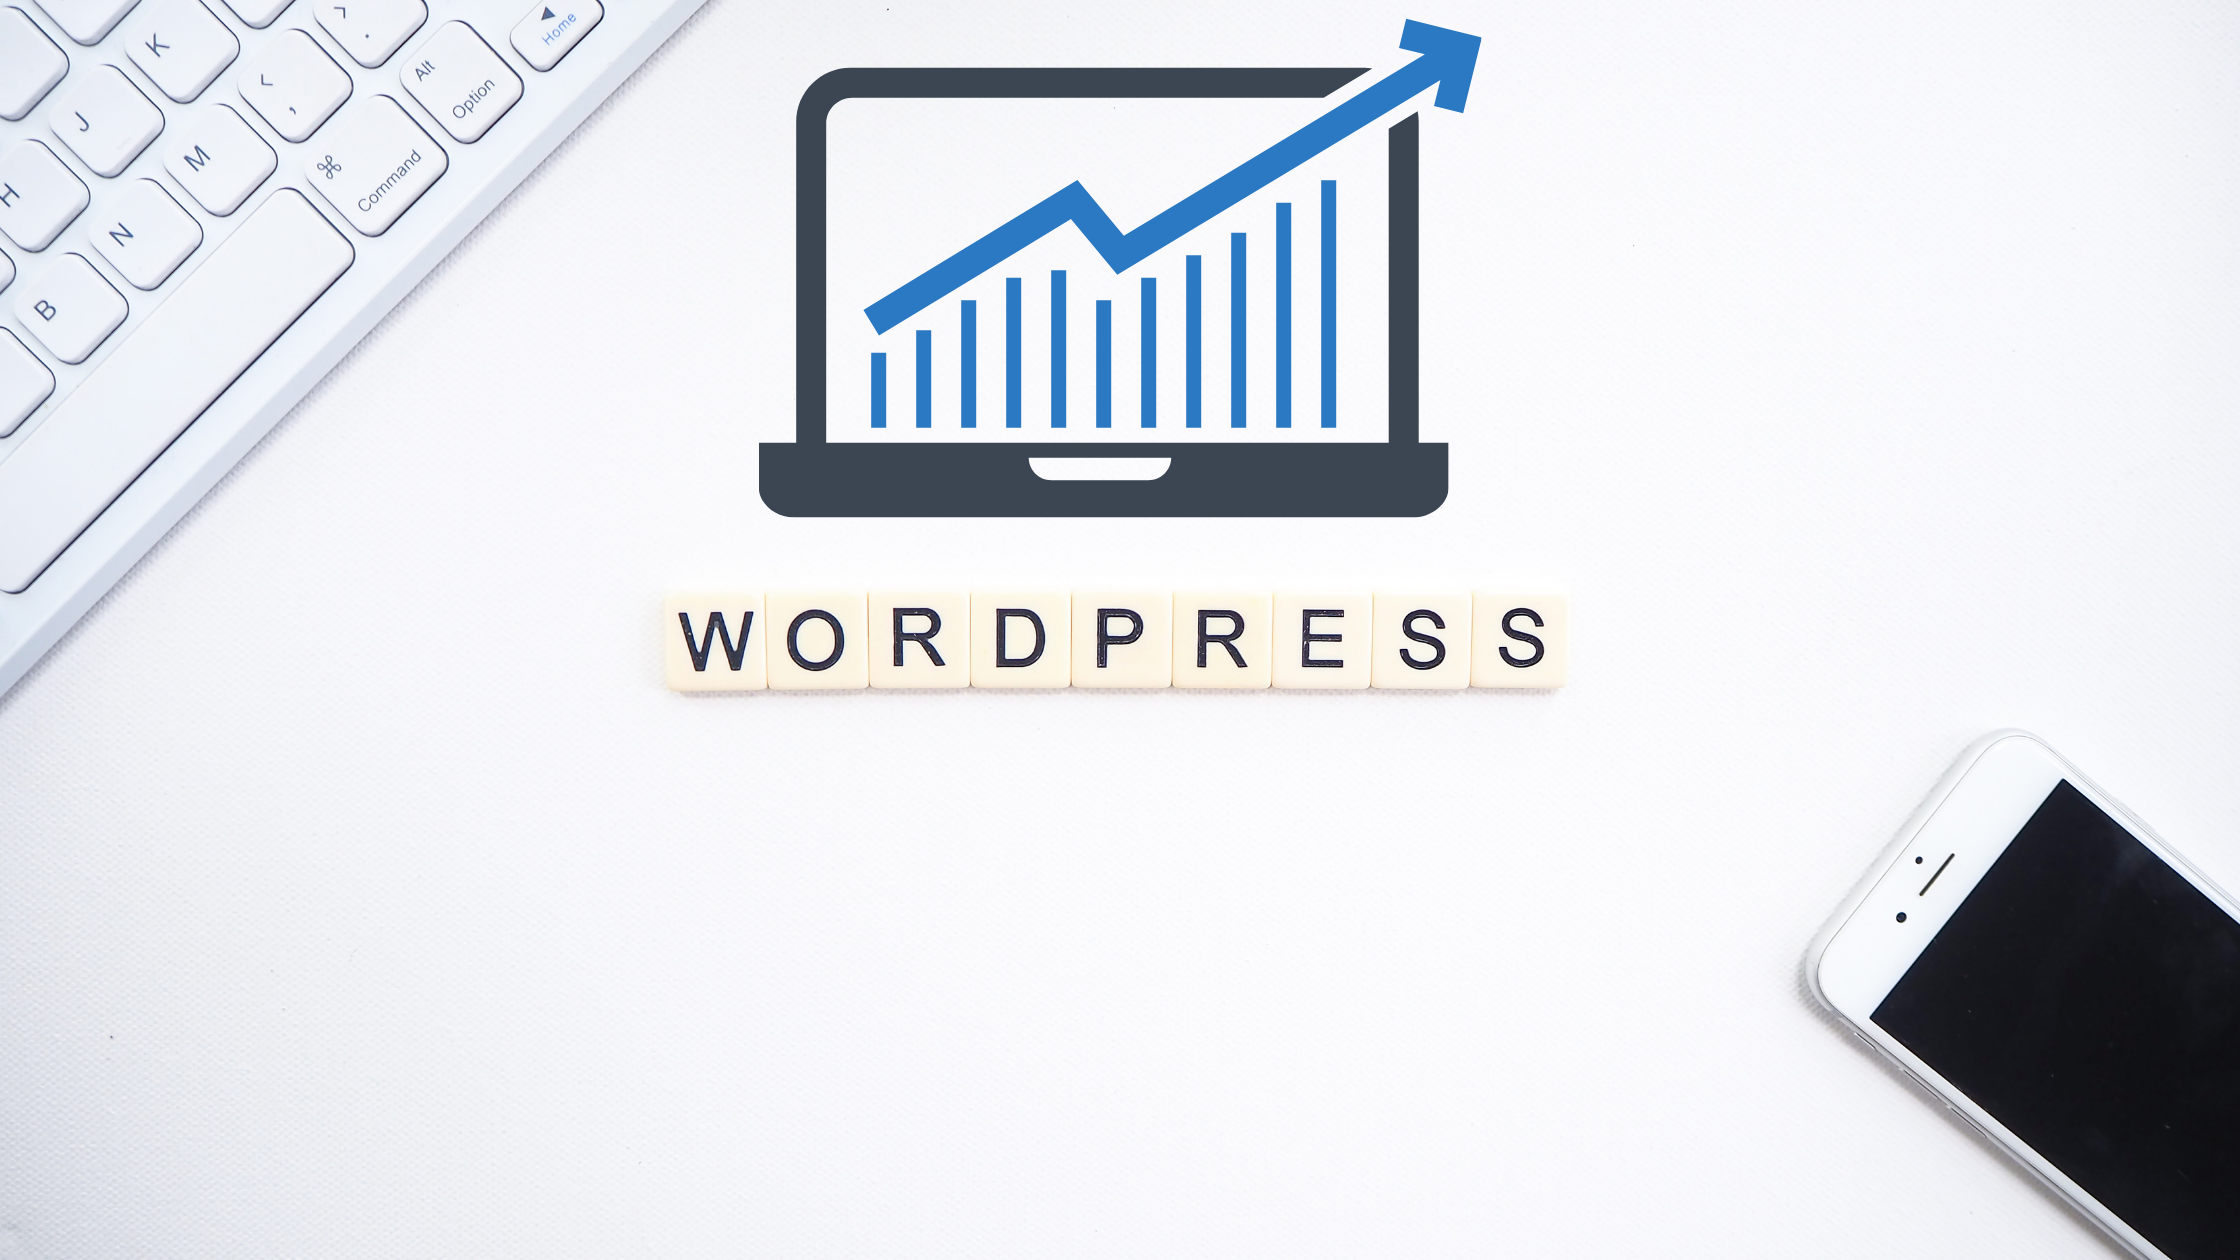 WordPress website traffic